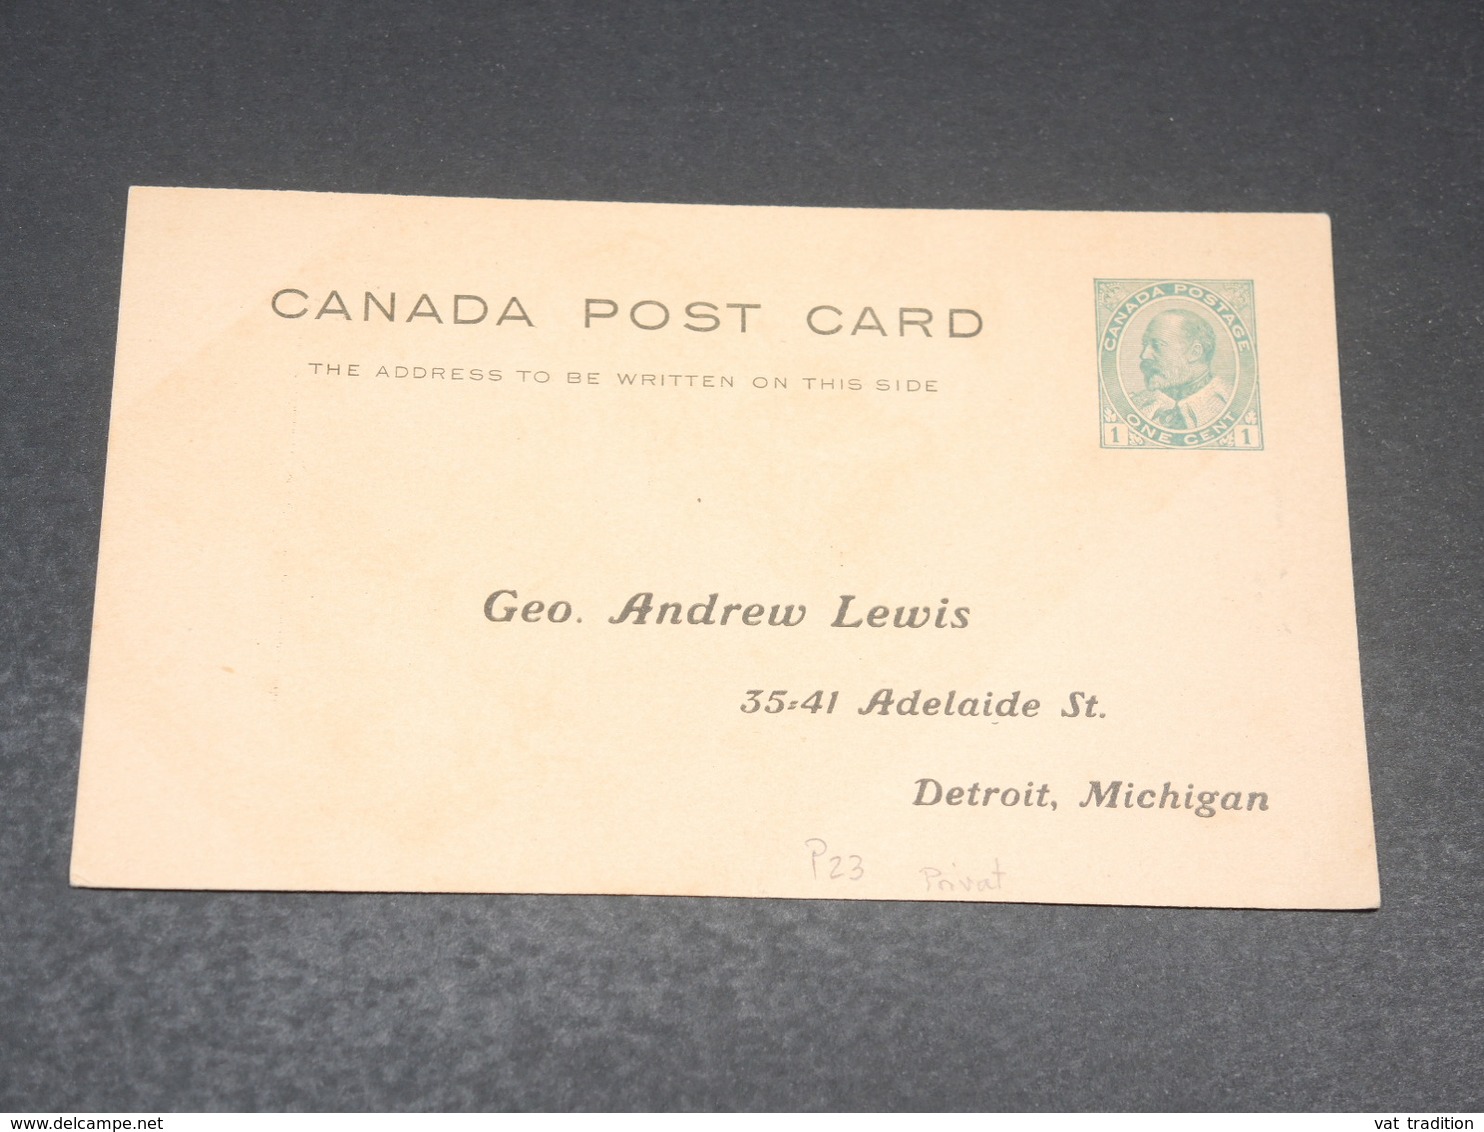 CANADA - Entier Postal Repiqué Non Circulé - L 19817 - 1903-1954 De Koningen